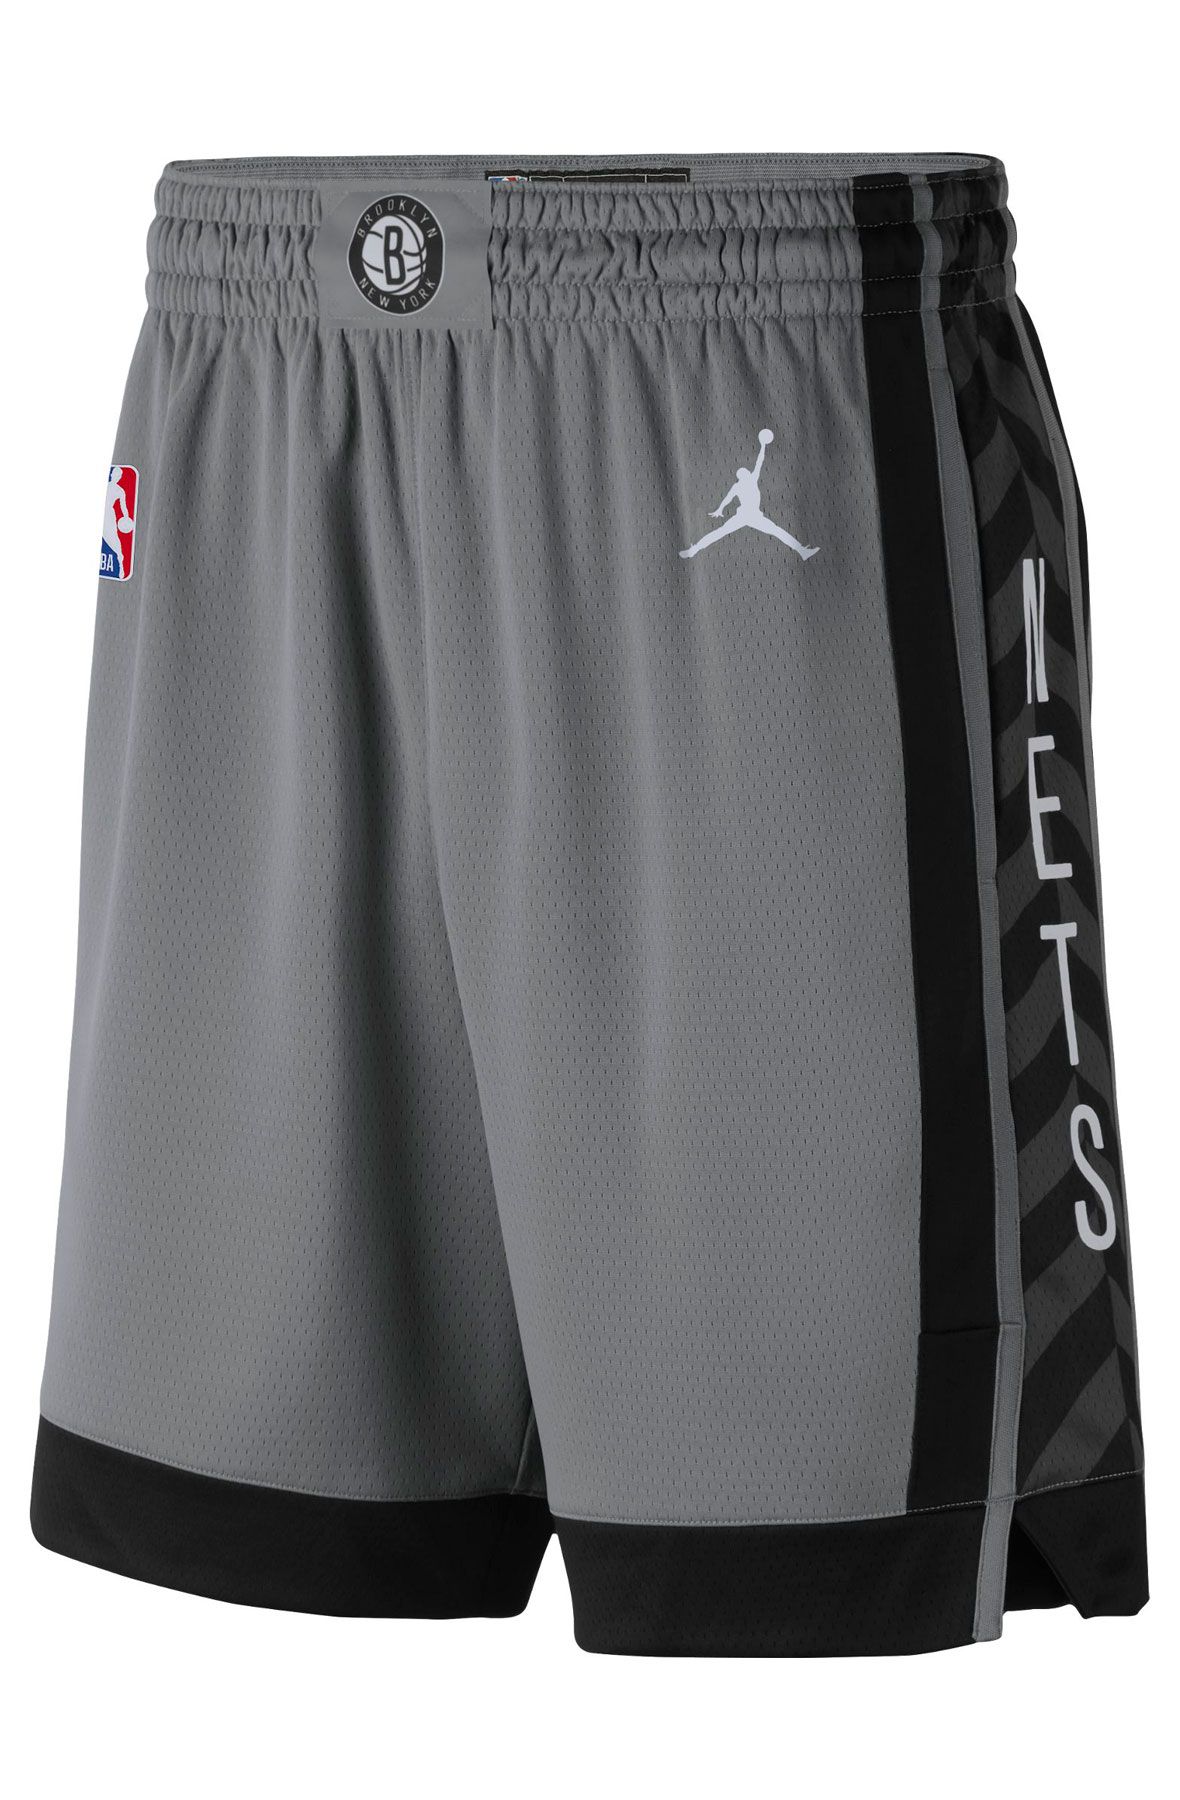 Nike Basketball Brooklyn Nets NBA Swingman shorts in white